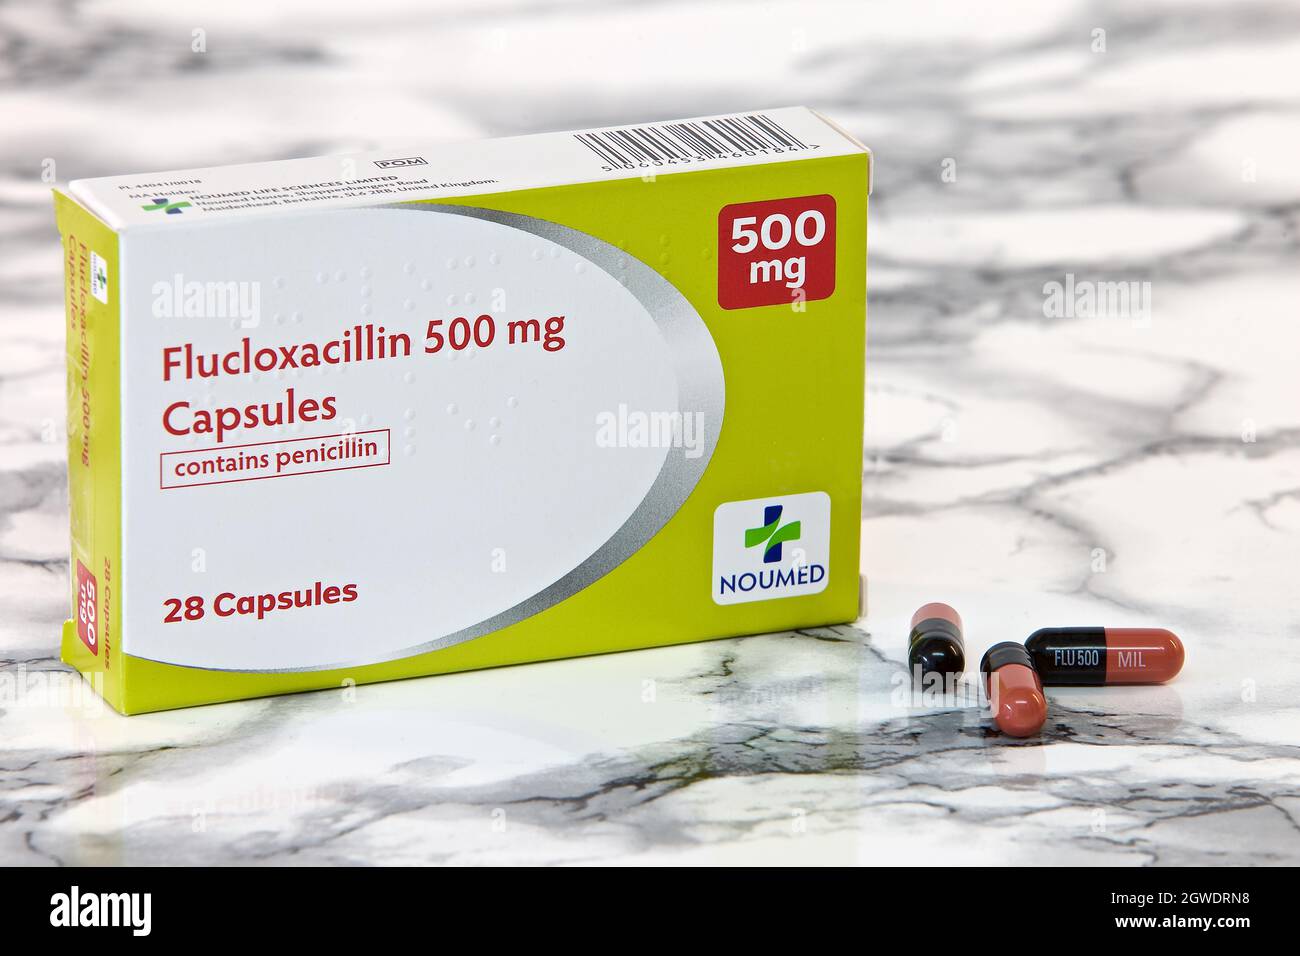 Flucloxacillin 500mg capsules Stock Photo - Alamy